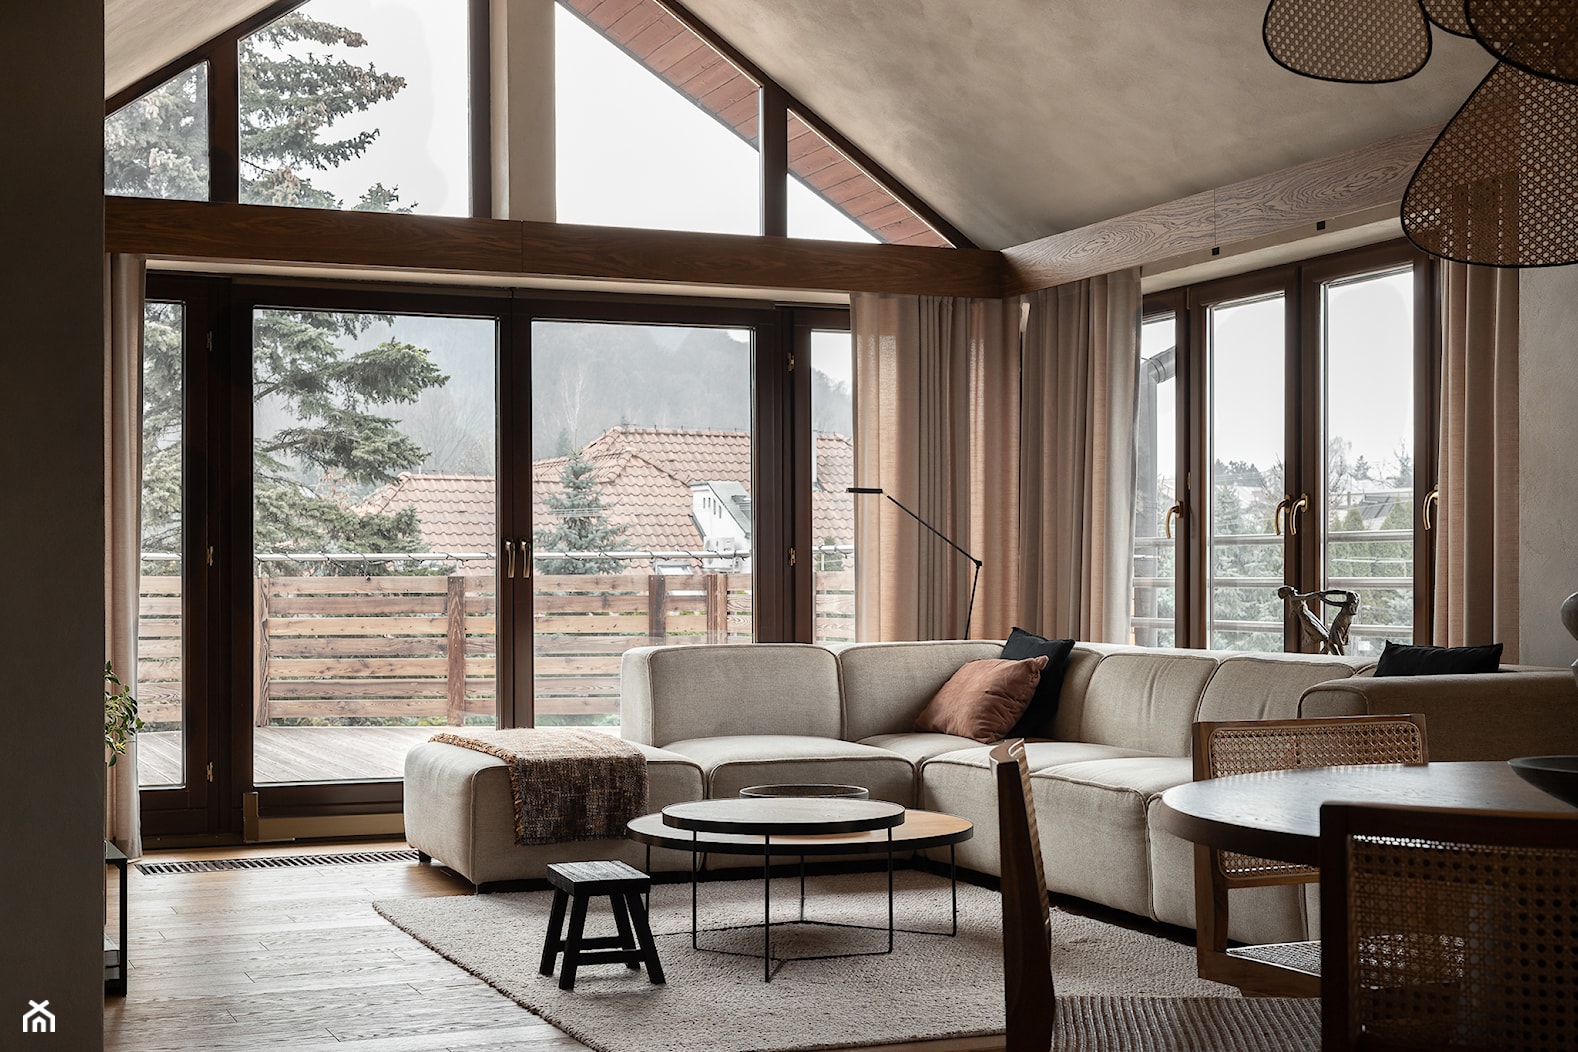 HSK APARTMENT - Salon, styl minimalistyczny - zdjęcie od Oskar Firek Architects - Homebook